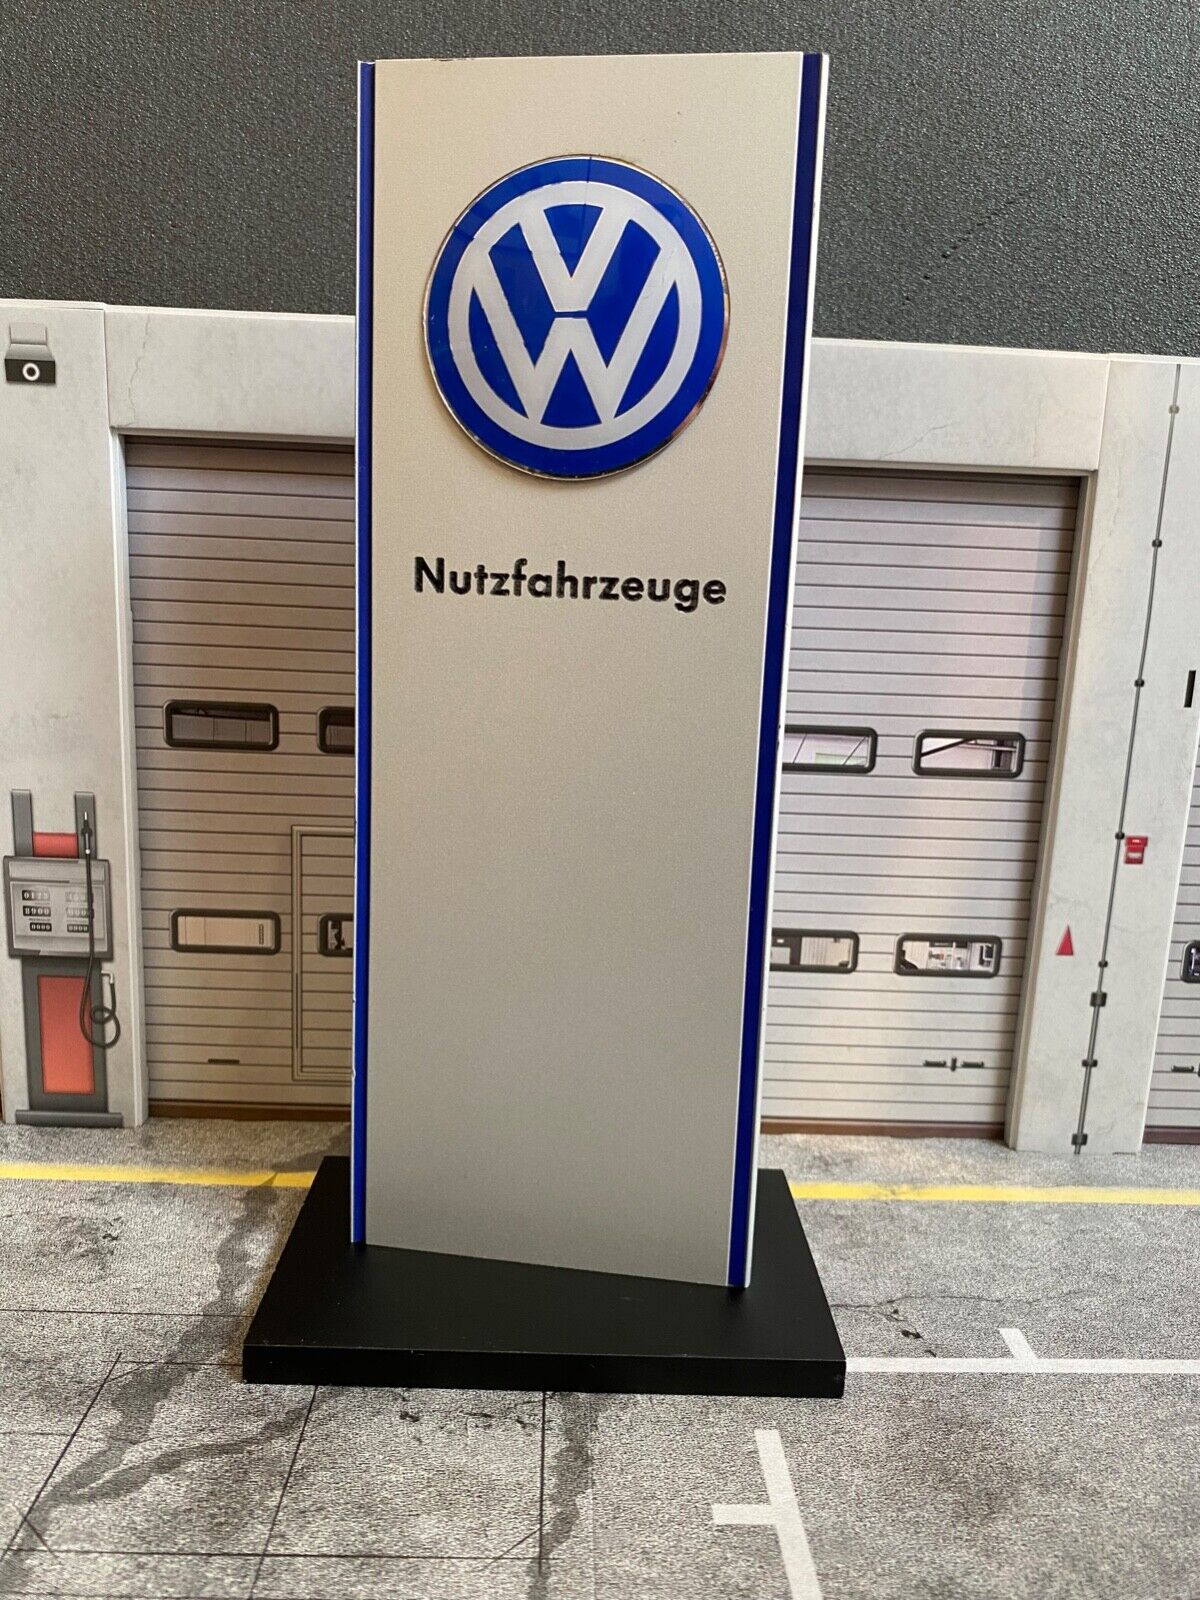 VW Pylon Nutzfahrzeuge Metall ca. 1,9 kg ca. 29 cm hoch für VW Bus-Diorama 1:18